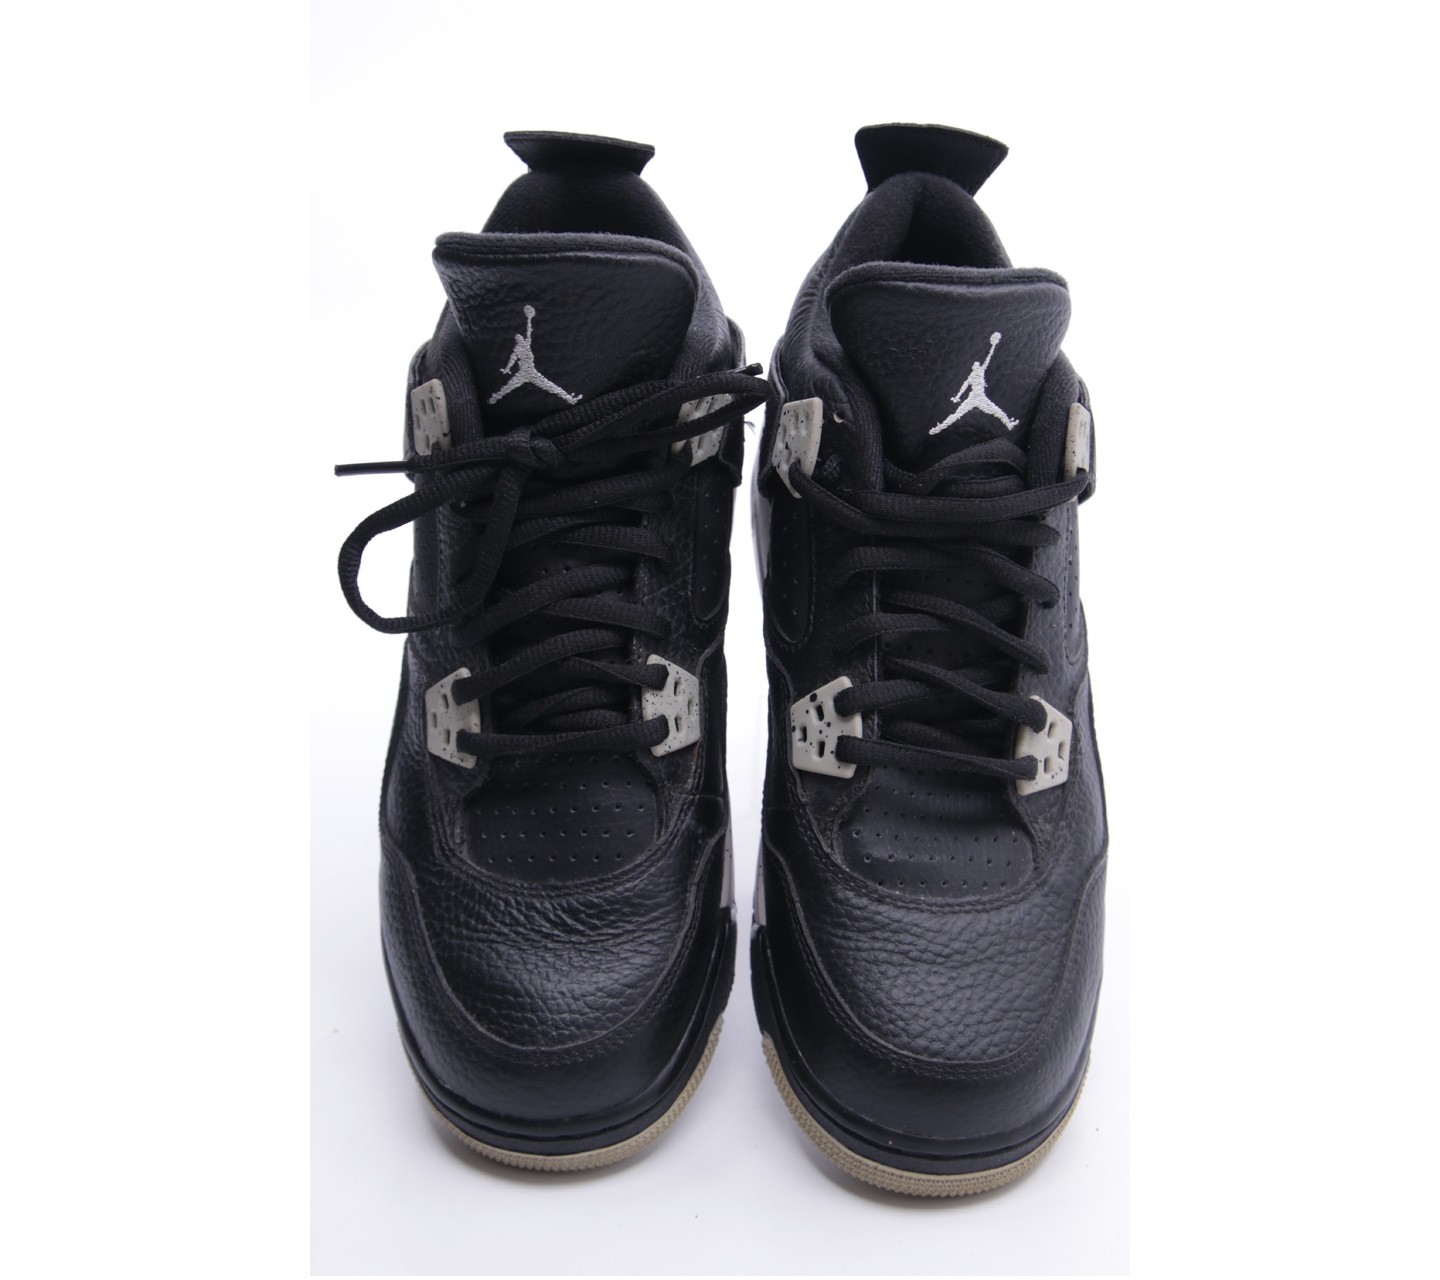 Nike Black Air Jordan Retro 4 IV Black Oreo Sneakers